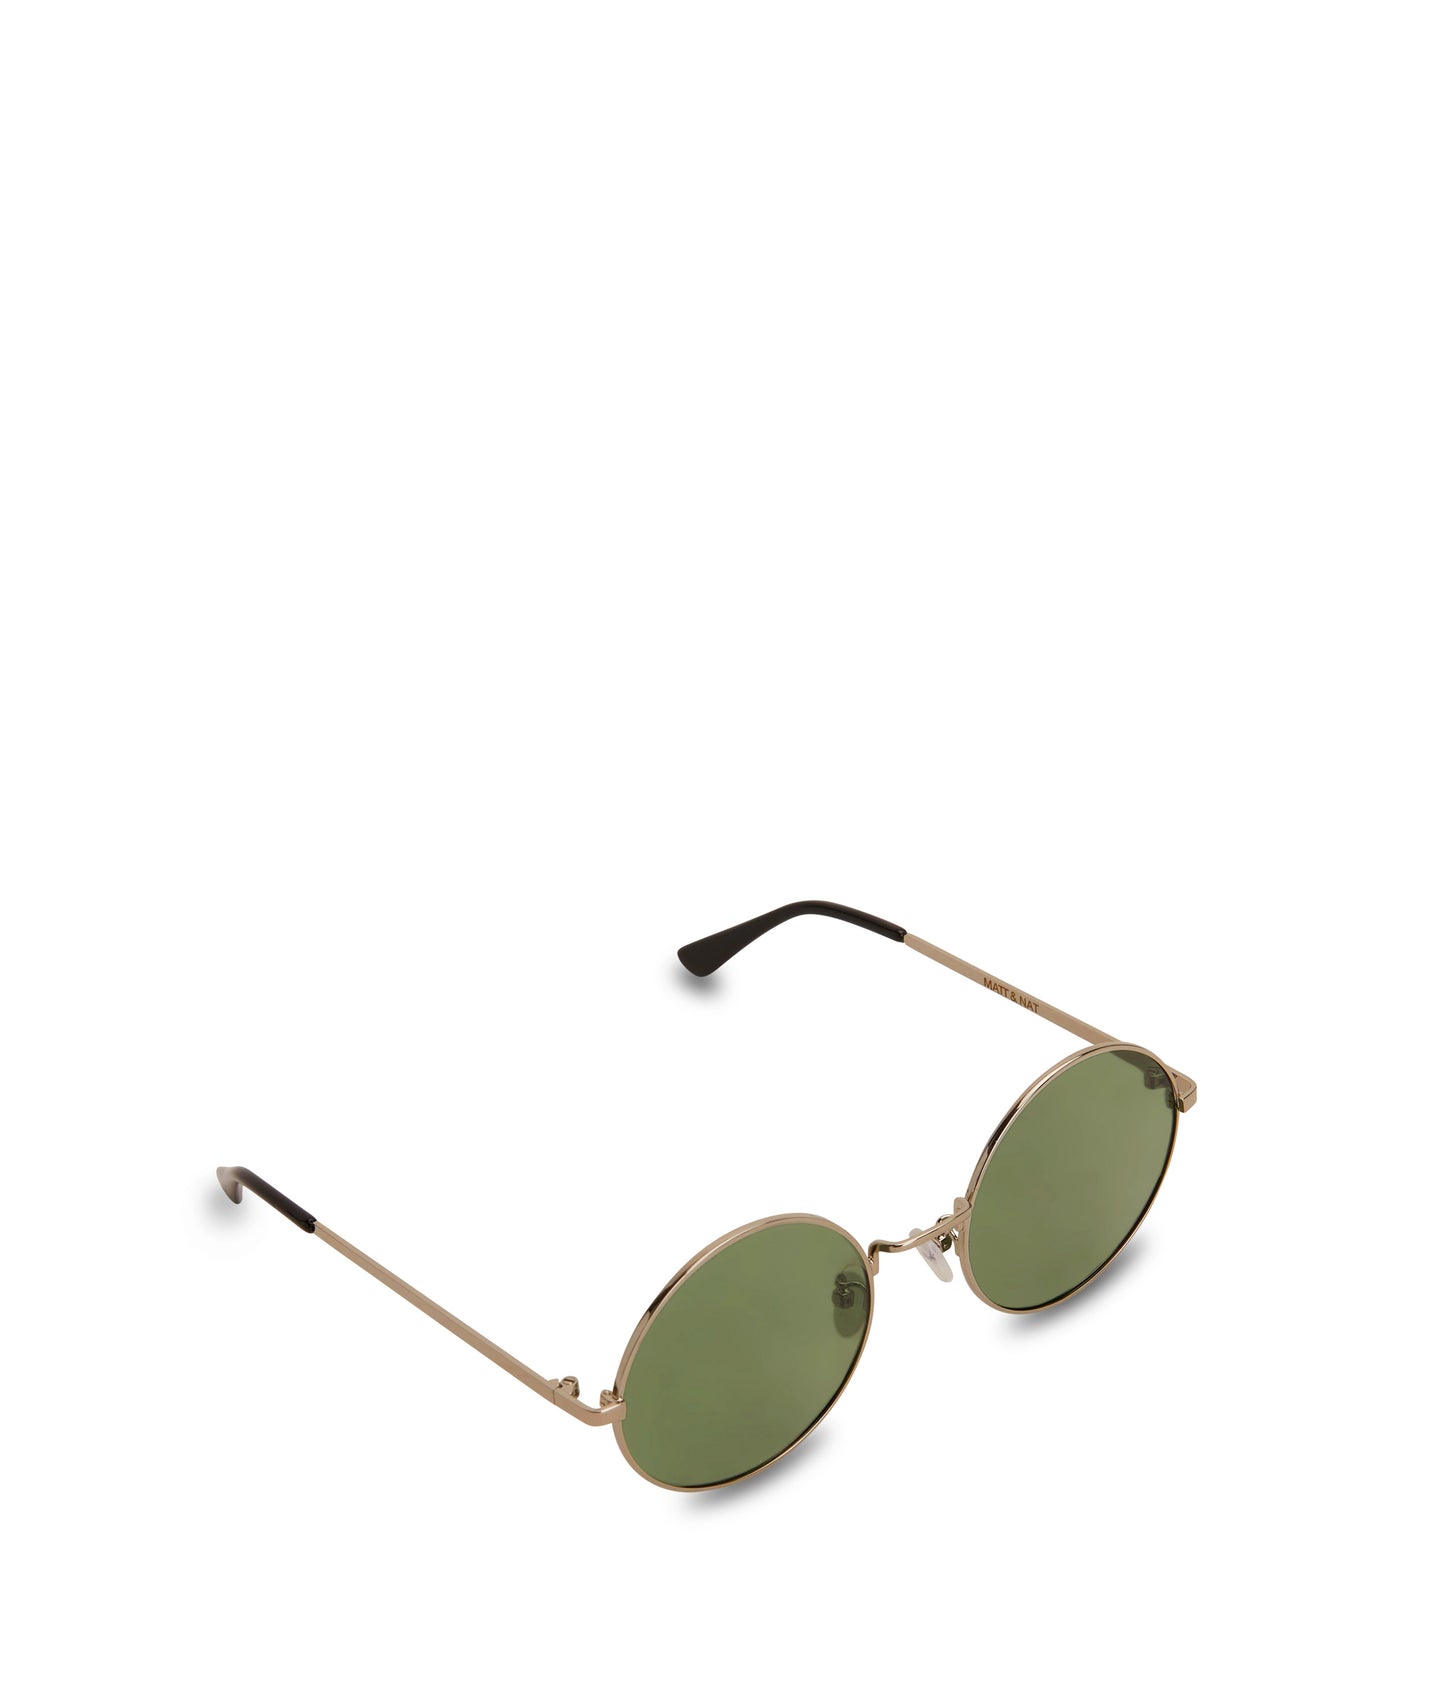 COLE Round Metal Sunglasses | Color: Gold, Khaki - variant::golkha